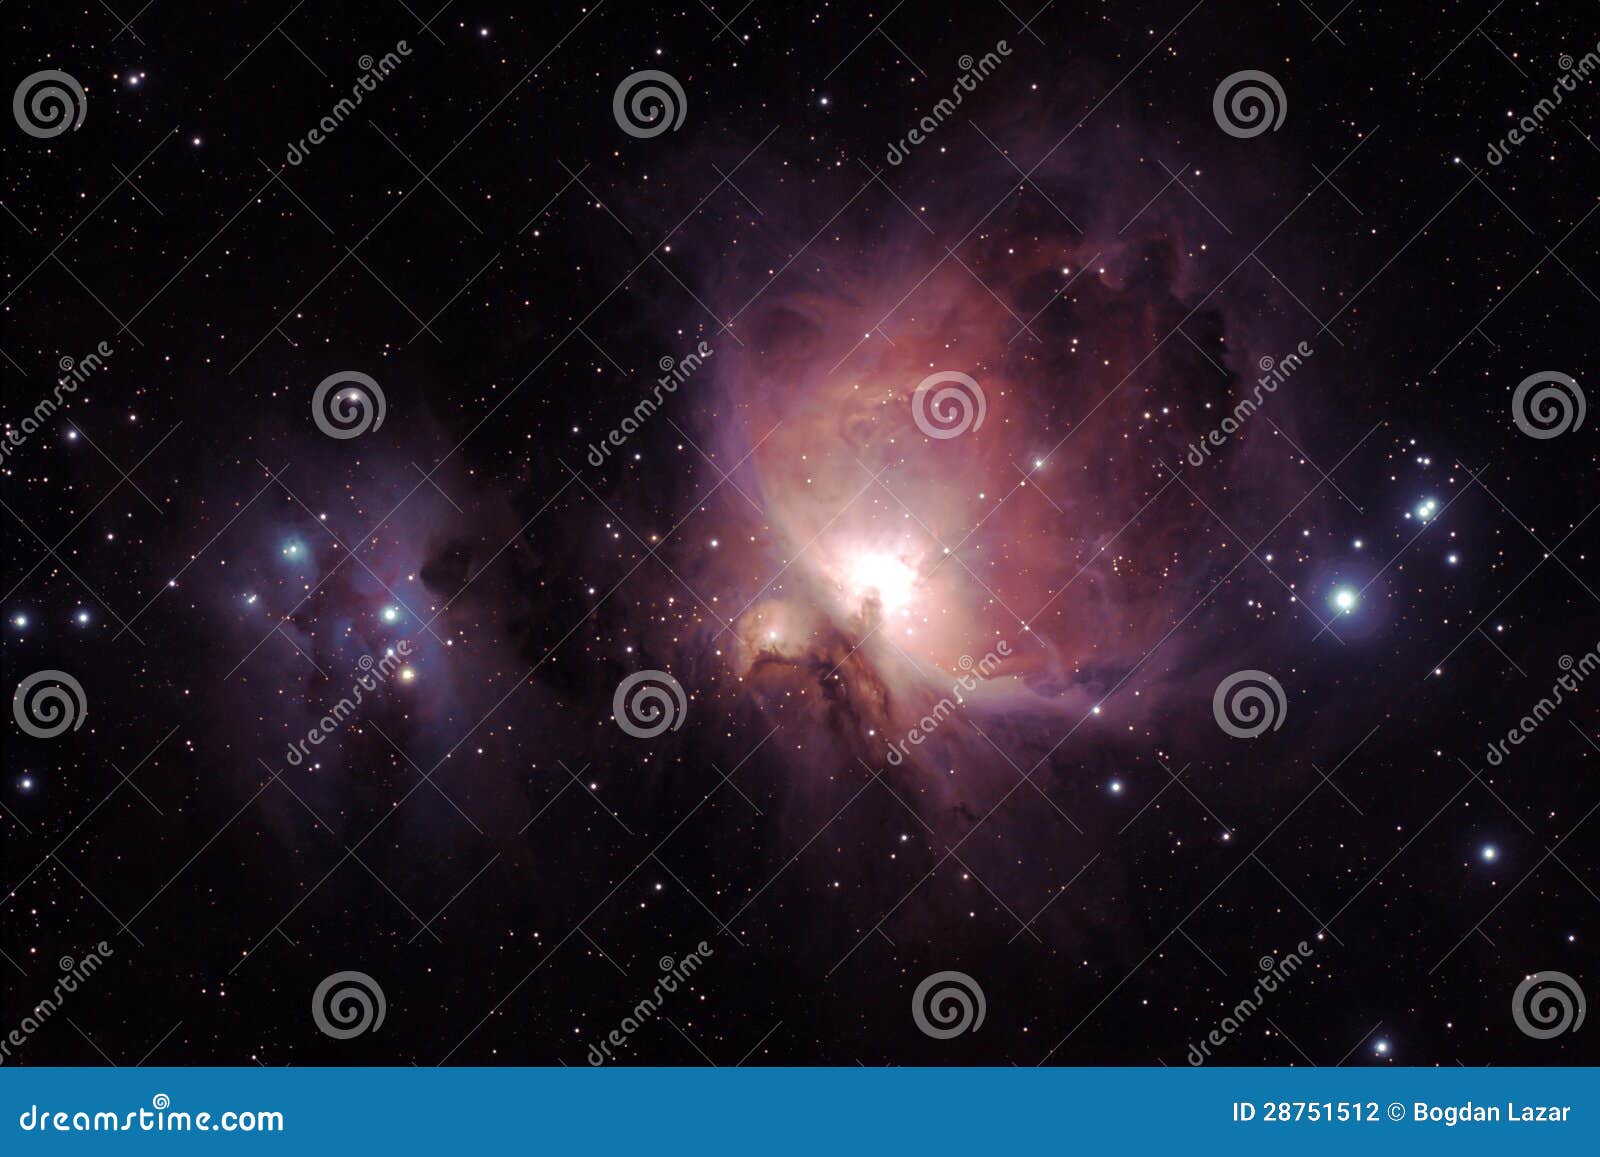 orion nebula - m42